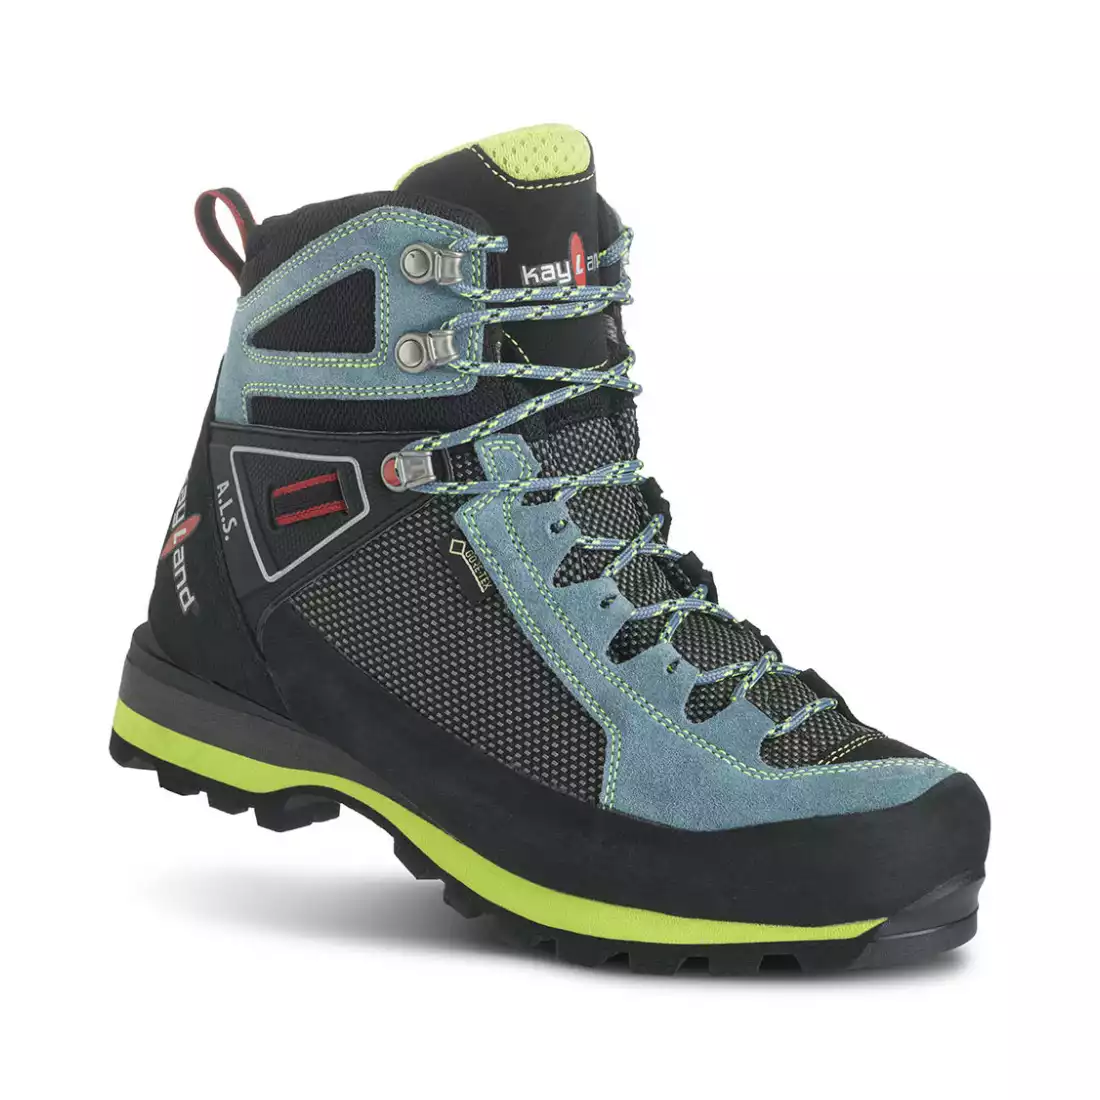 KAYLAND CROSS MOUNTAIN WS GTX Women's trekking shoes, GORE-TEX, VIBRAM, black and blue